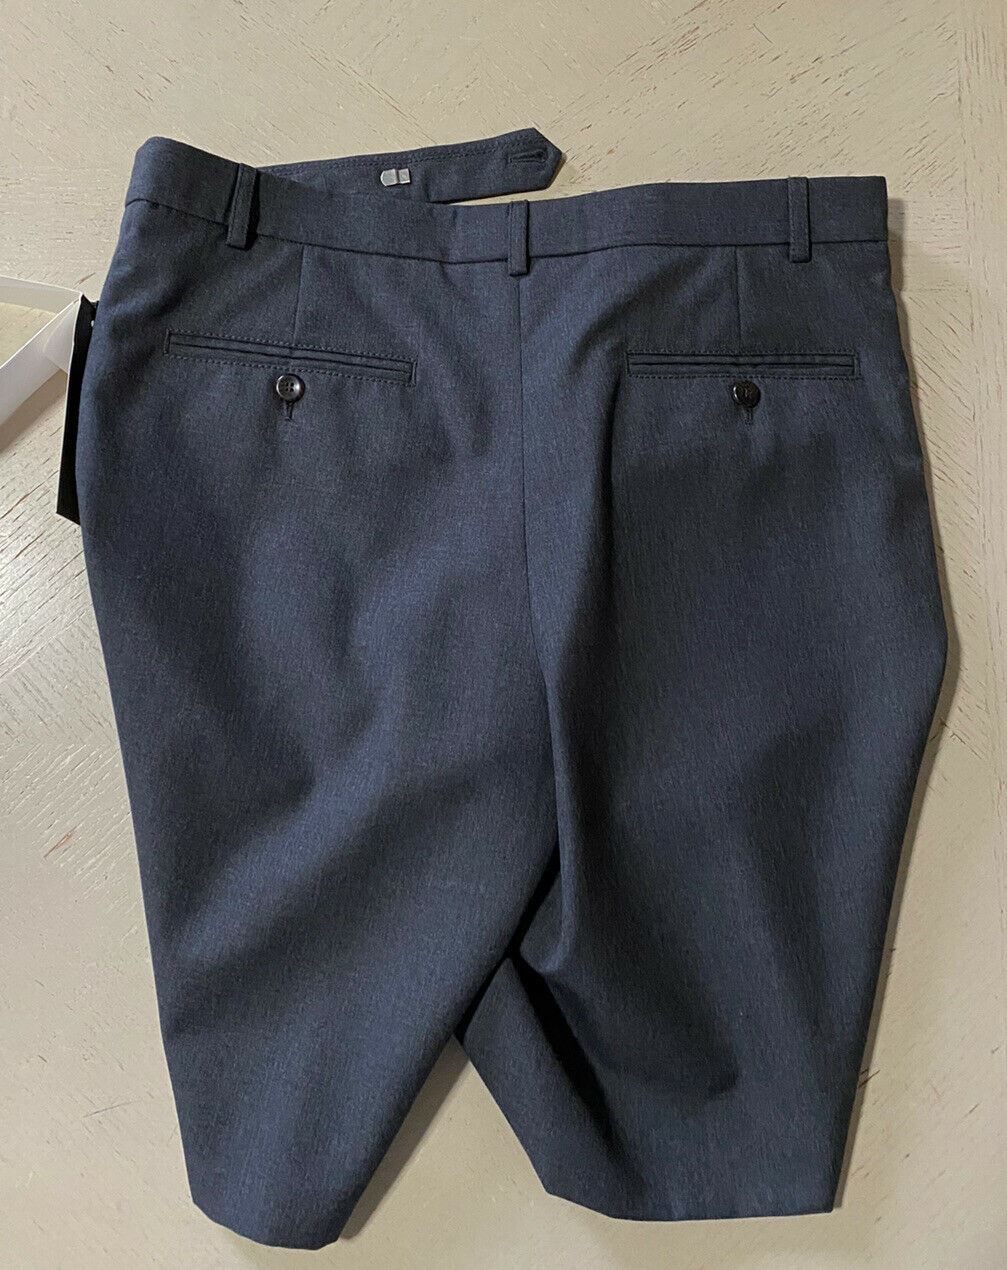 NWT $790 Gucci Mens Short Pants DK Gray Size 30 US ( 46 Eu ) Italy